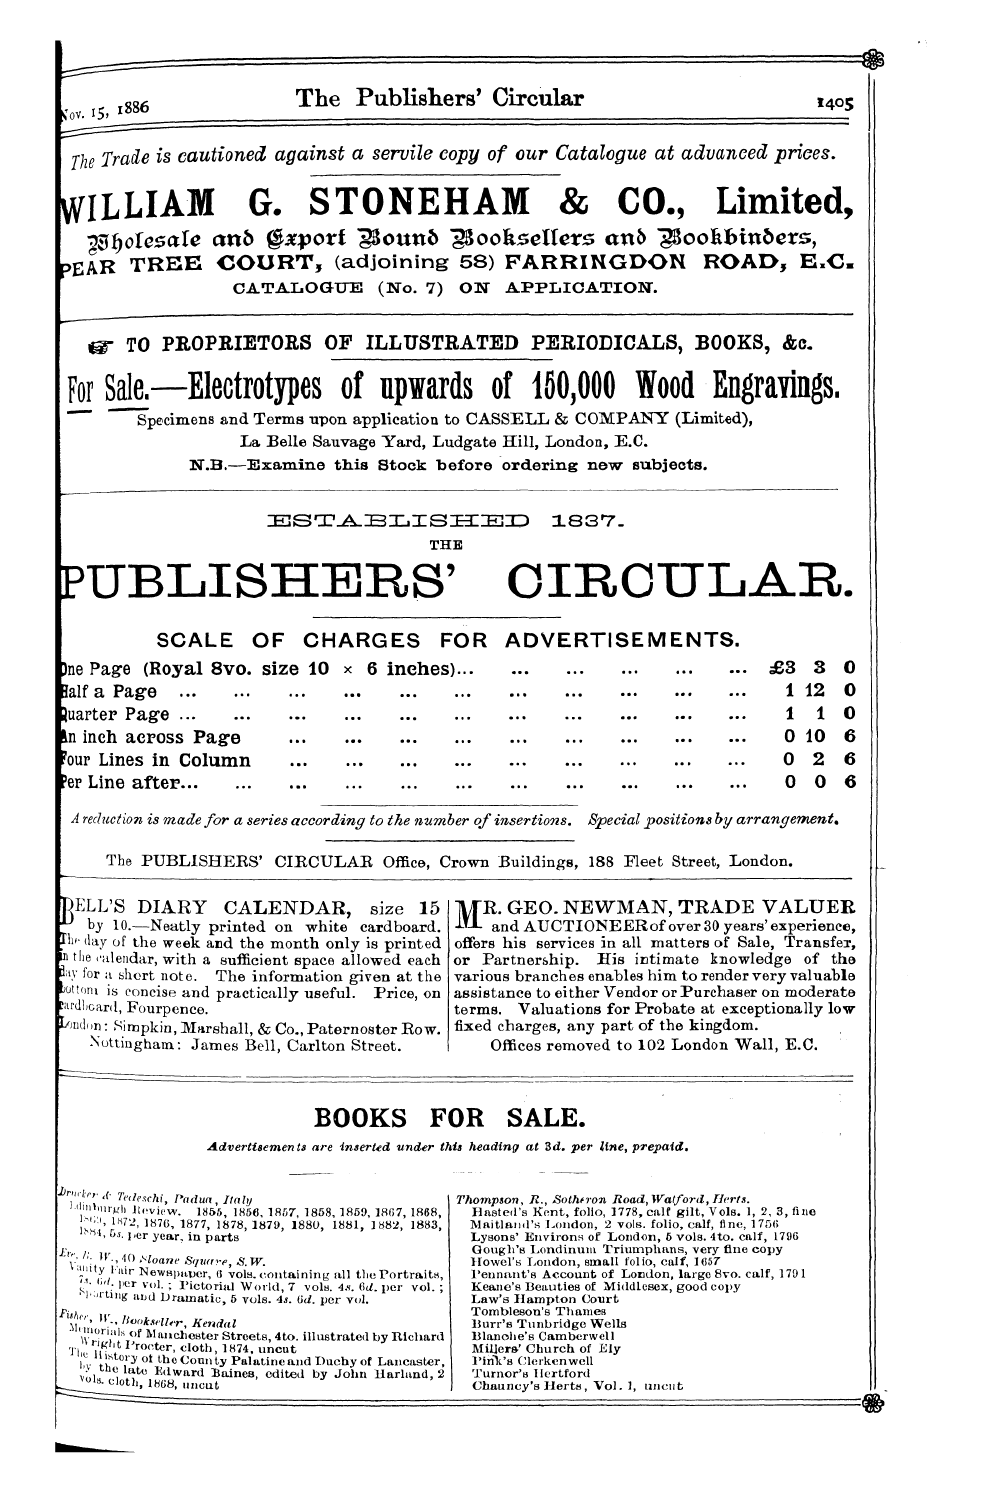 Publishers’ Circular (1880-1890): jS F Y, 1st edition: 47